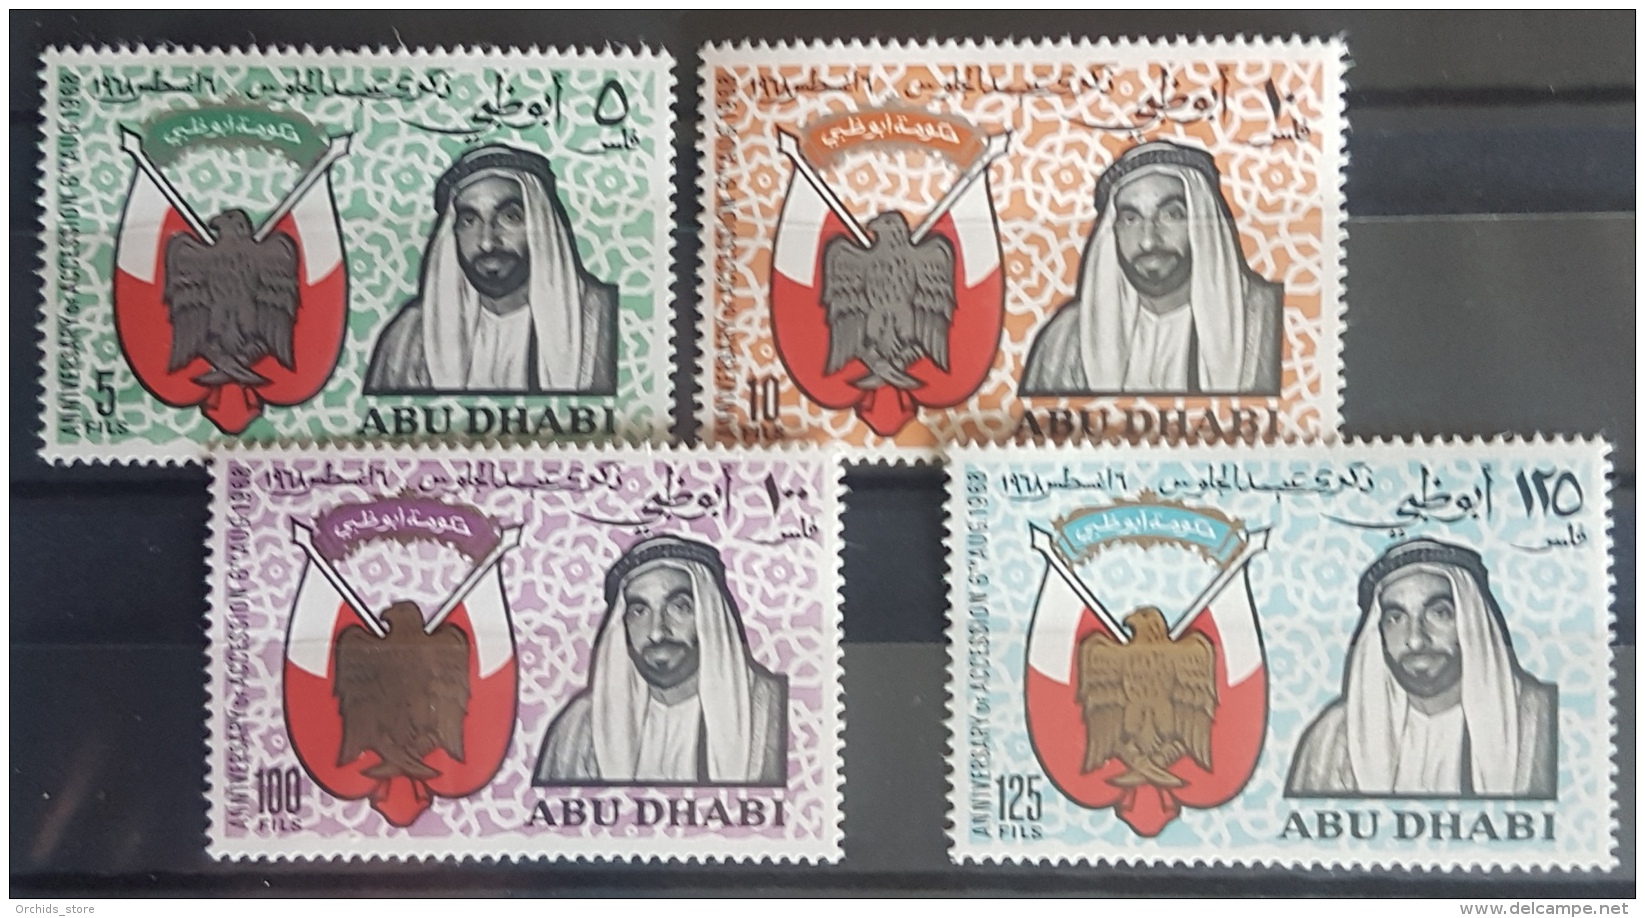 HX35 - Abu Dhabi 1968 SG 45/48 Complete Set 4v. MNH - Shaikh Zaid Accession Anniversary - Abu Dhabi